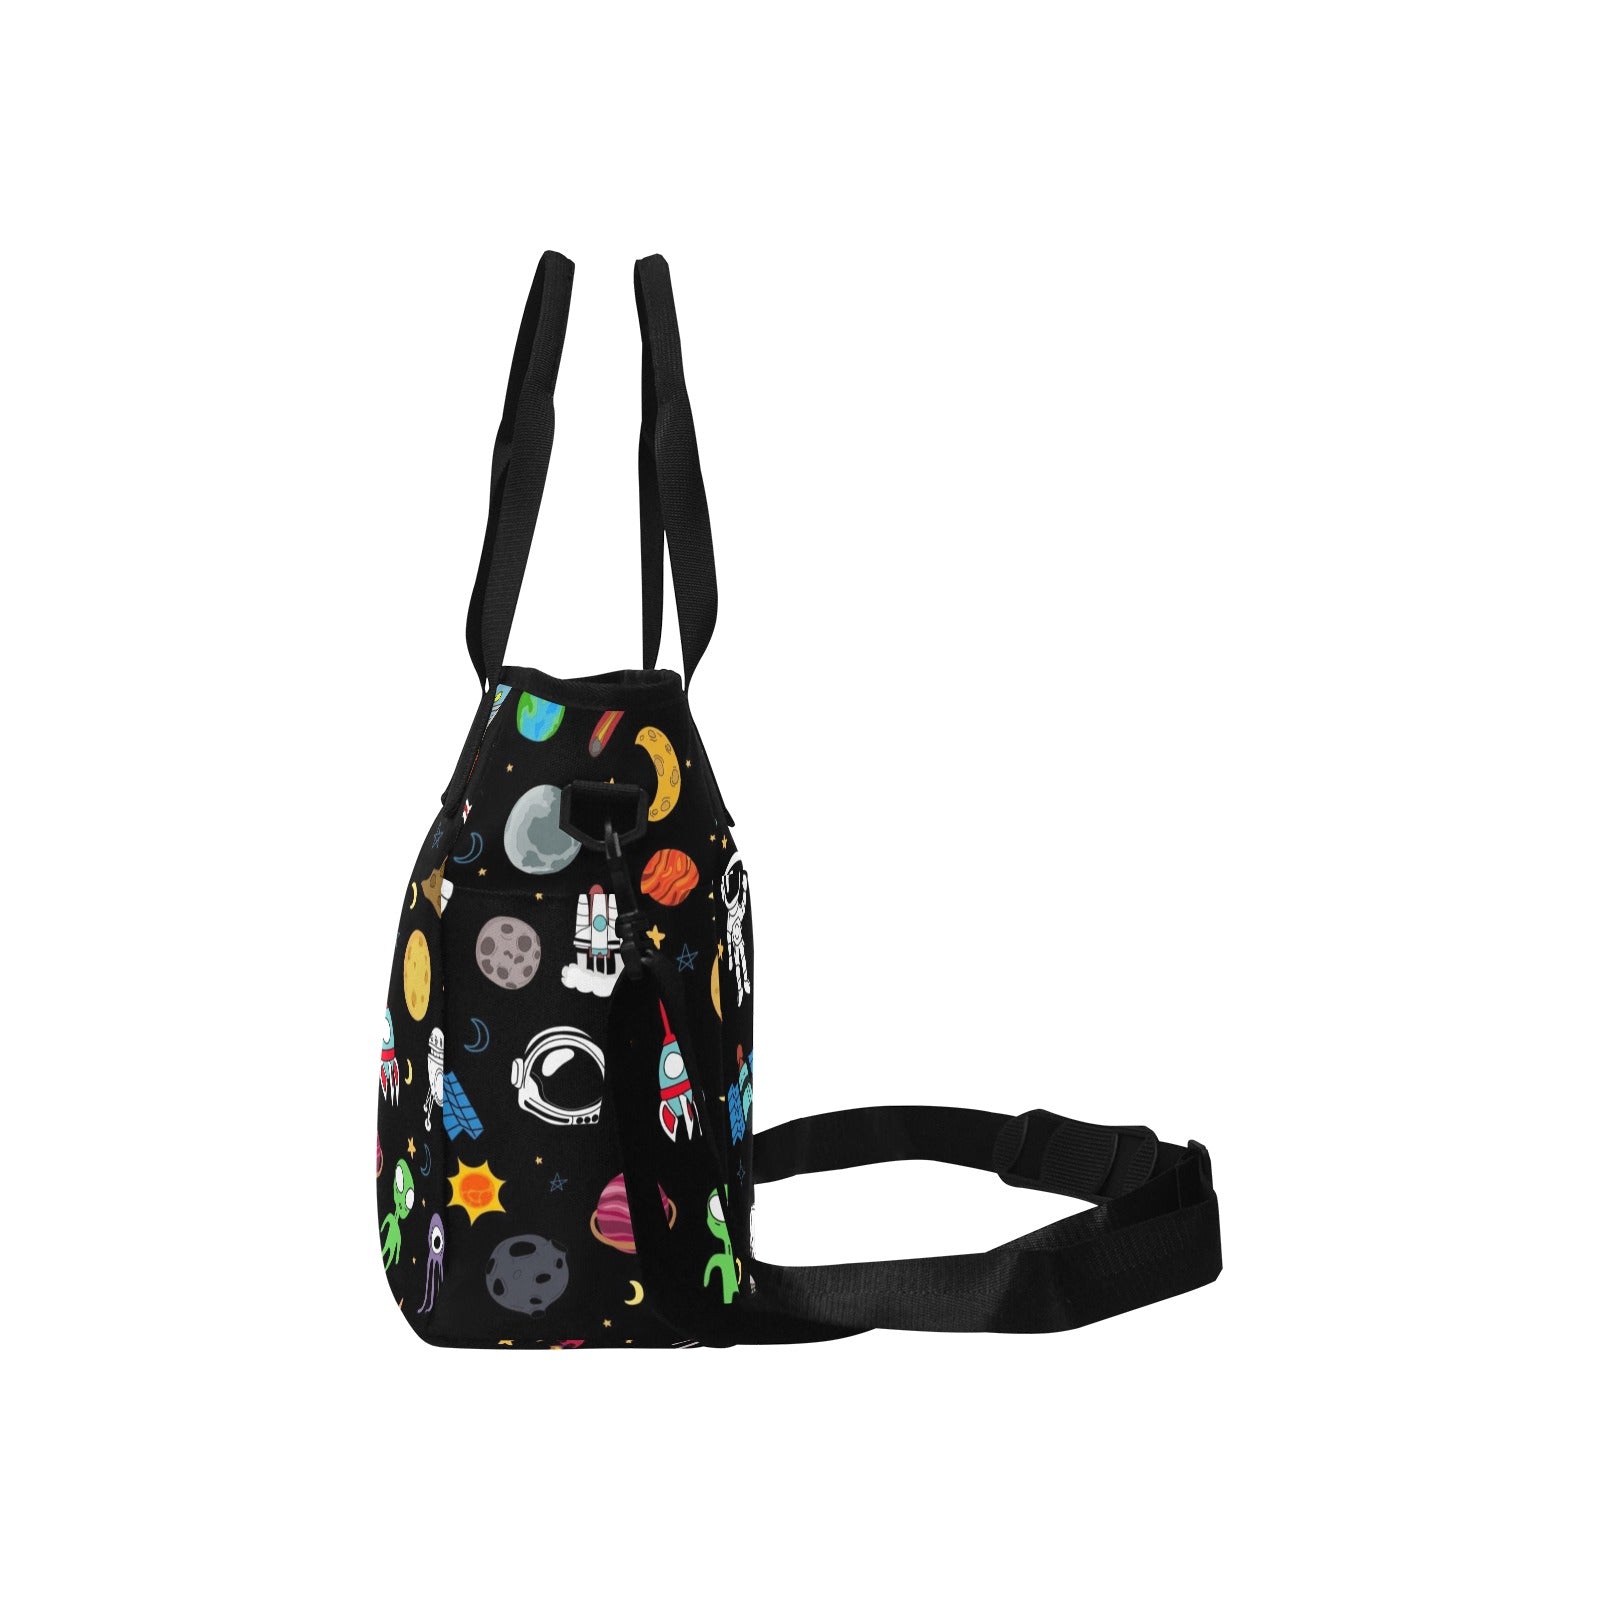 Kids Space - Tote Bag with Shoulder Strap Nylon Tote Bag